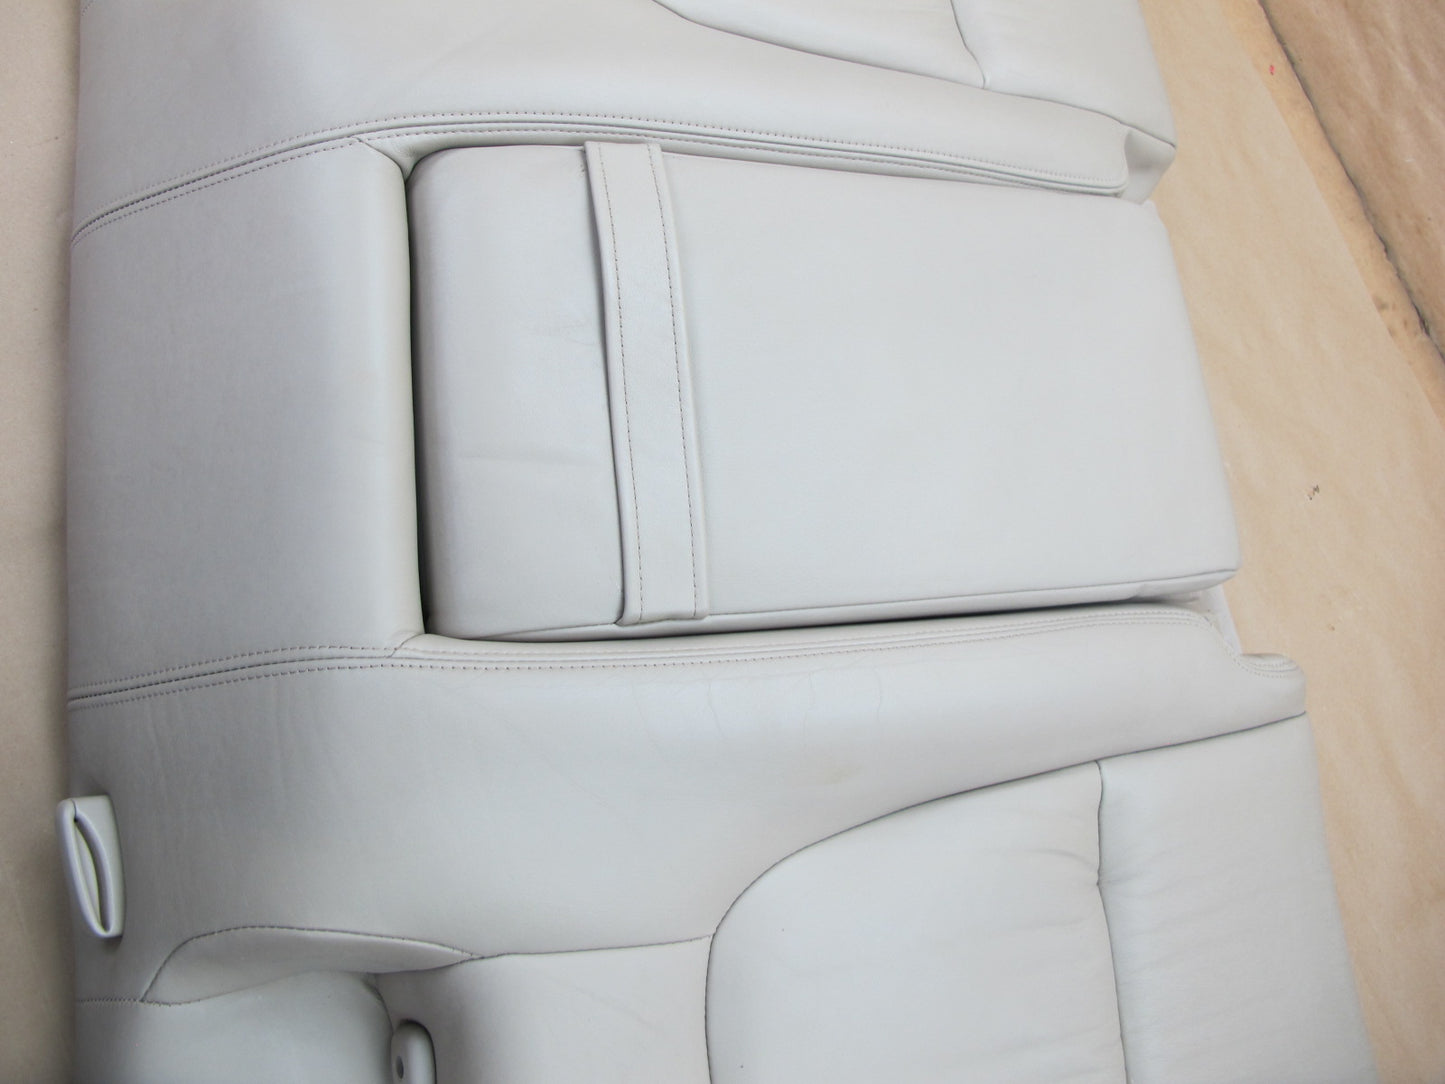 95-97 Lexus LS400 UCF20 Rear Upper Seat Cushion Leather Ivory OEM